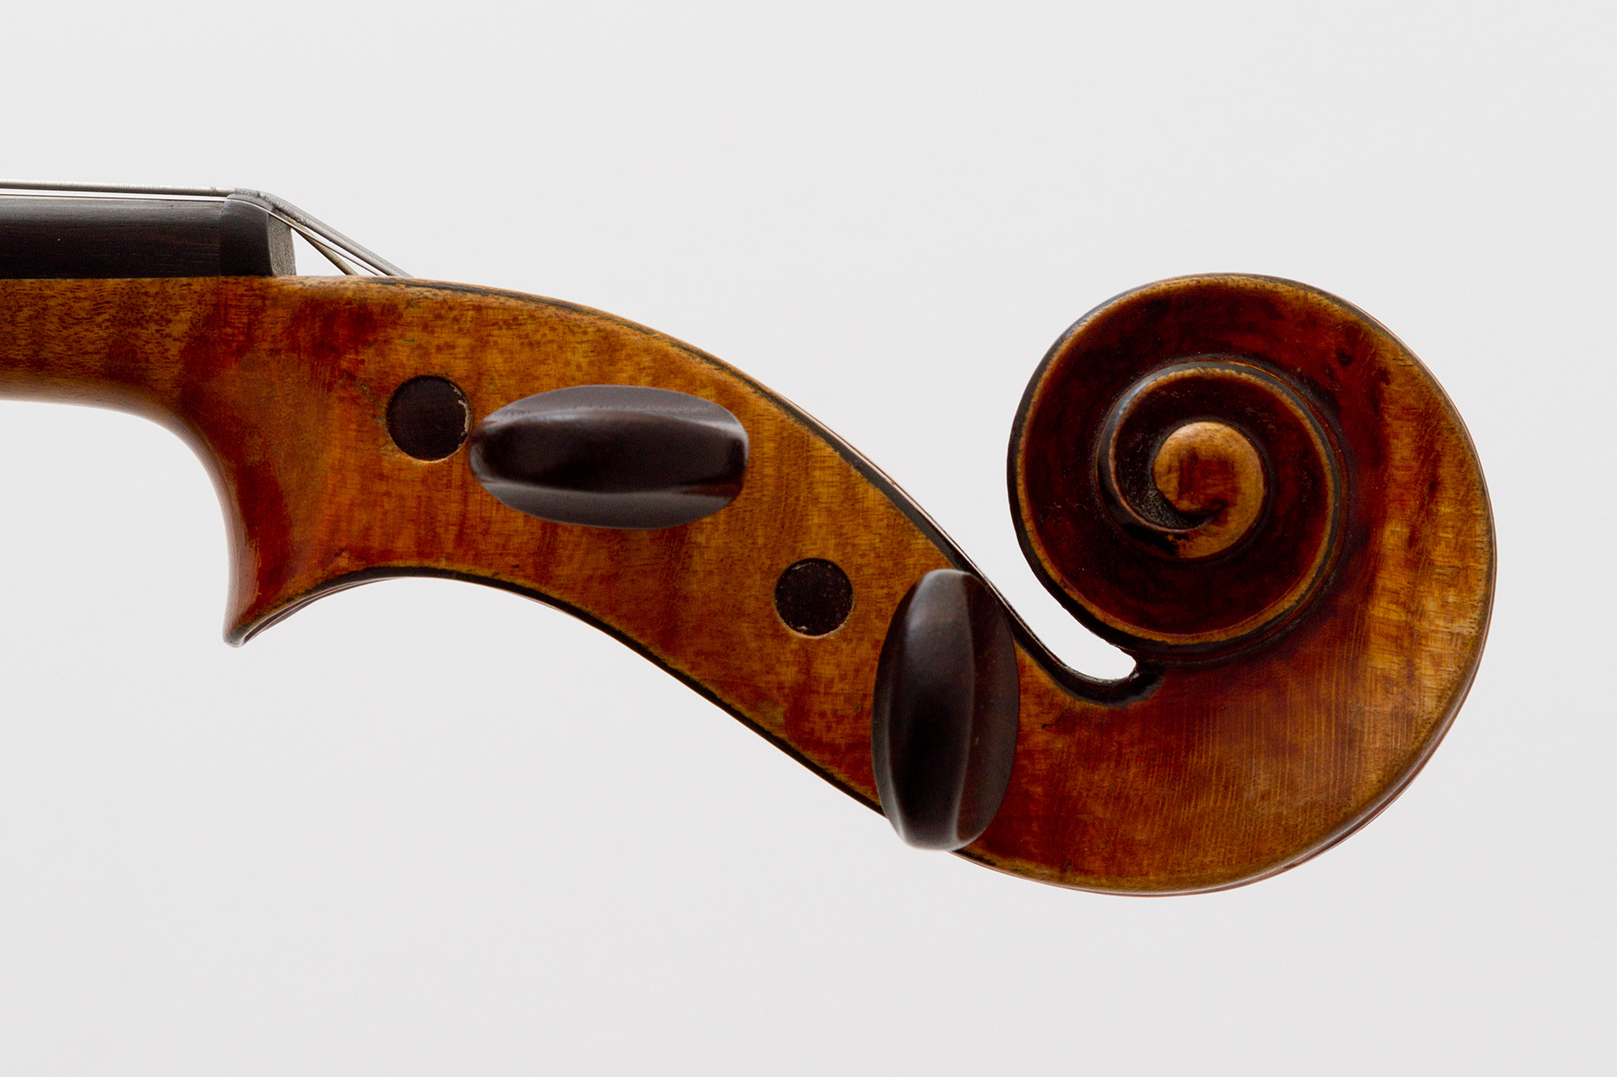 Mirecourt: Renowned violin-making town